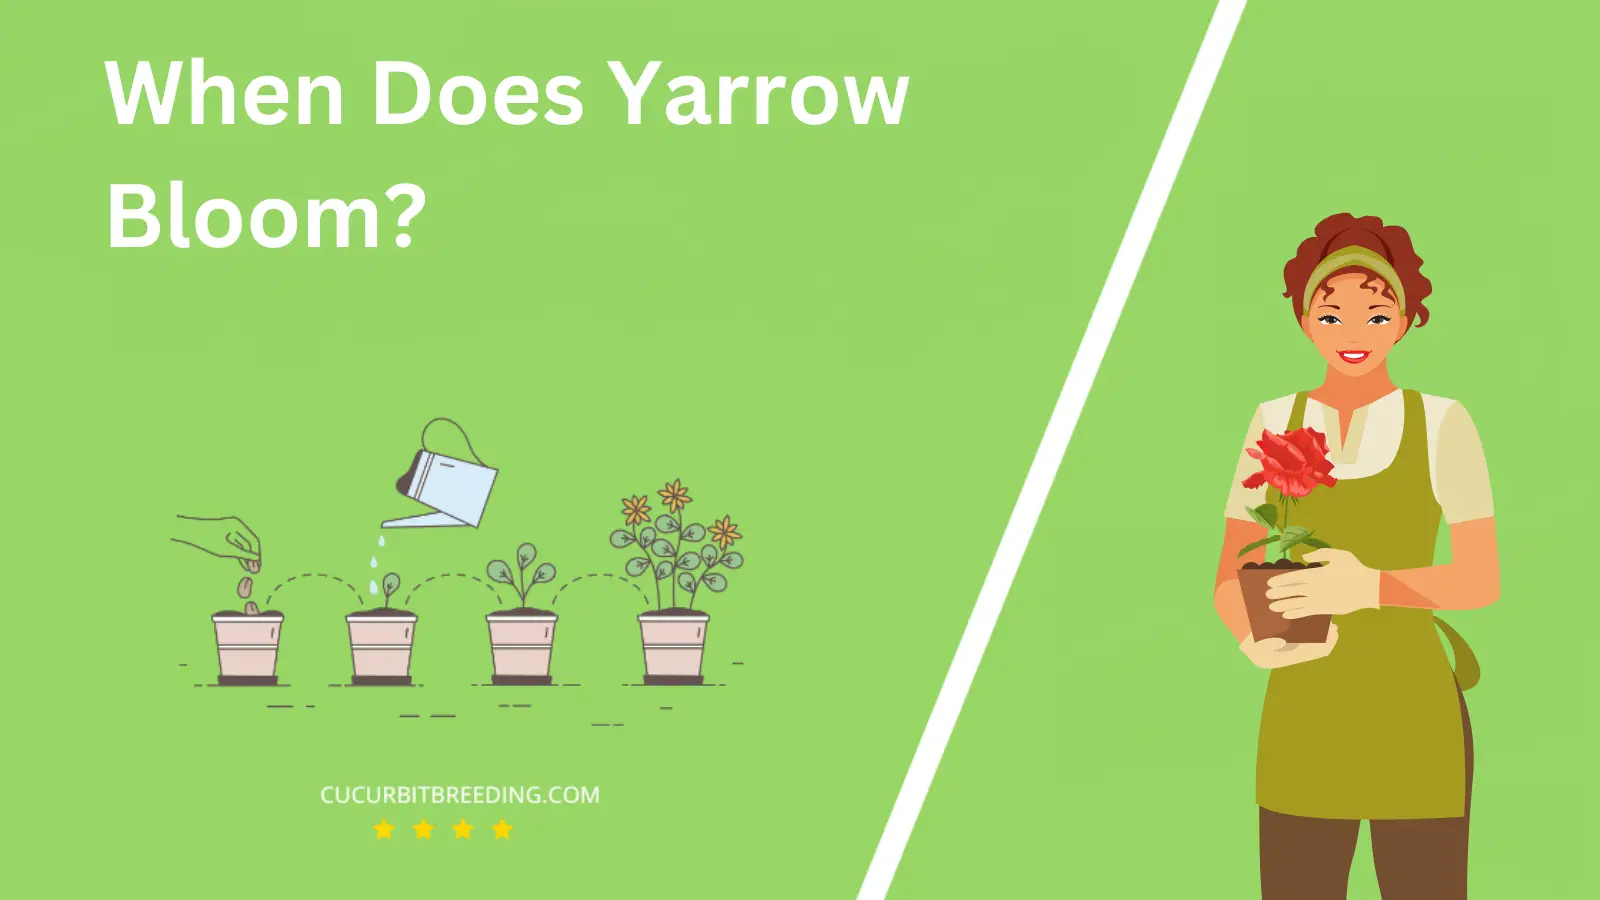 When Does Yarrow Bloom?